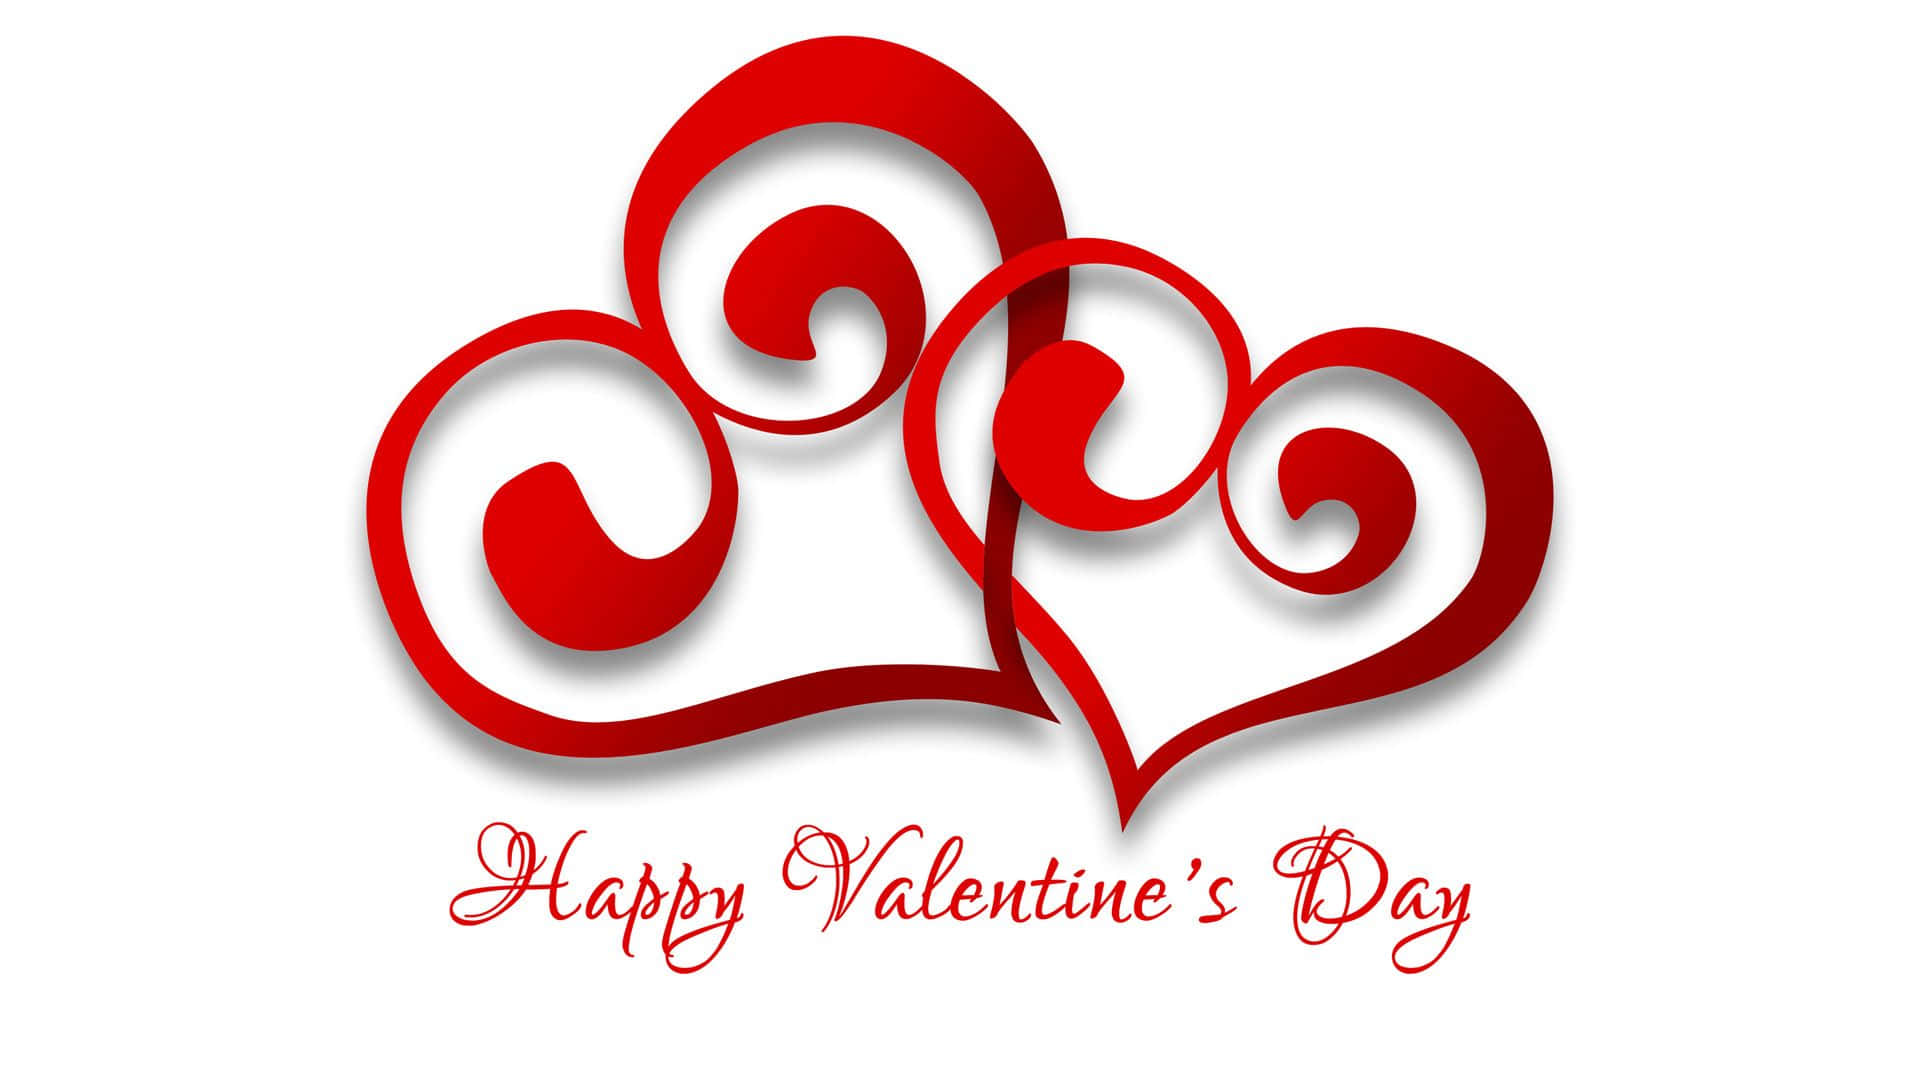 : Spreading love this Valentine’s Day